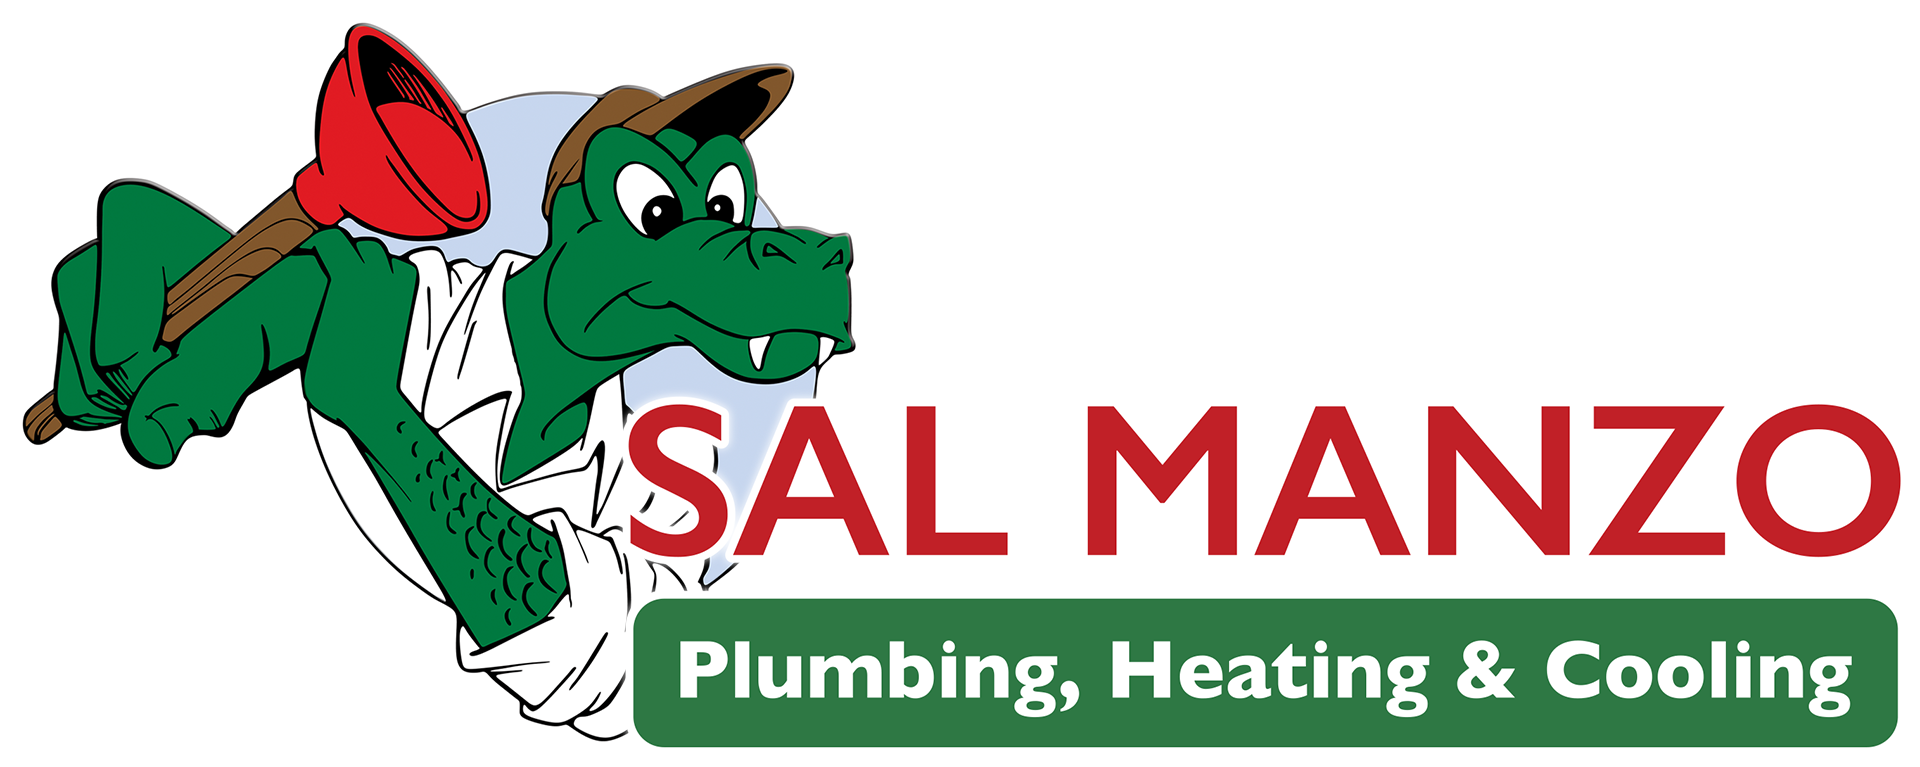 Why Choose Sal Manzo Plumbing, Heating & Cooling?